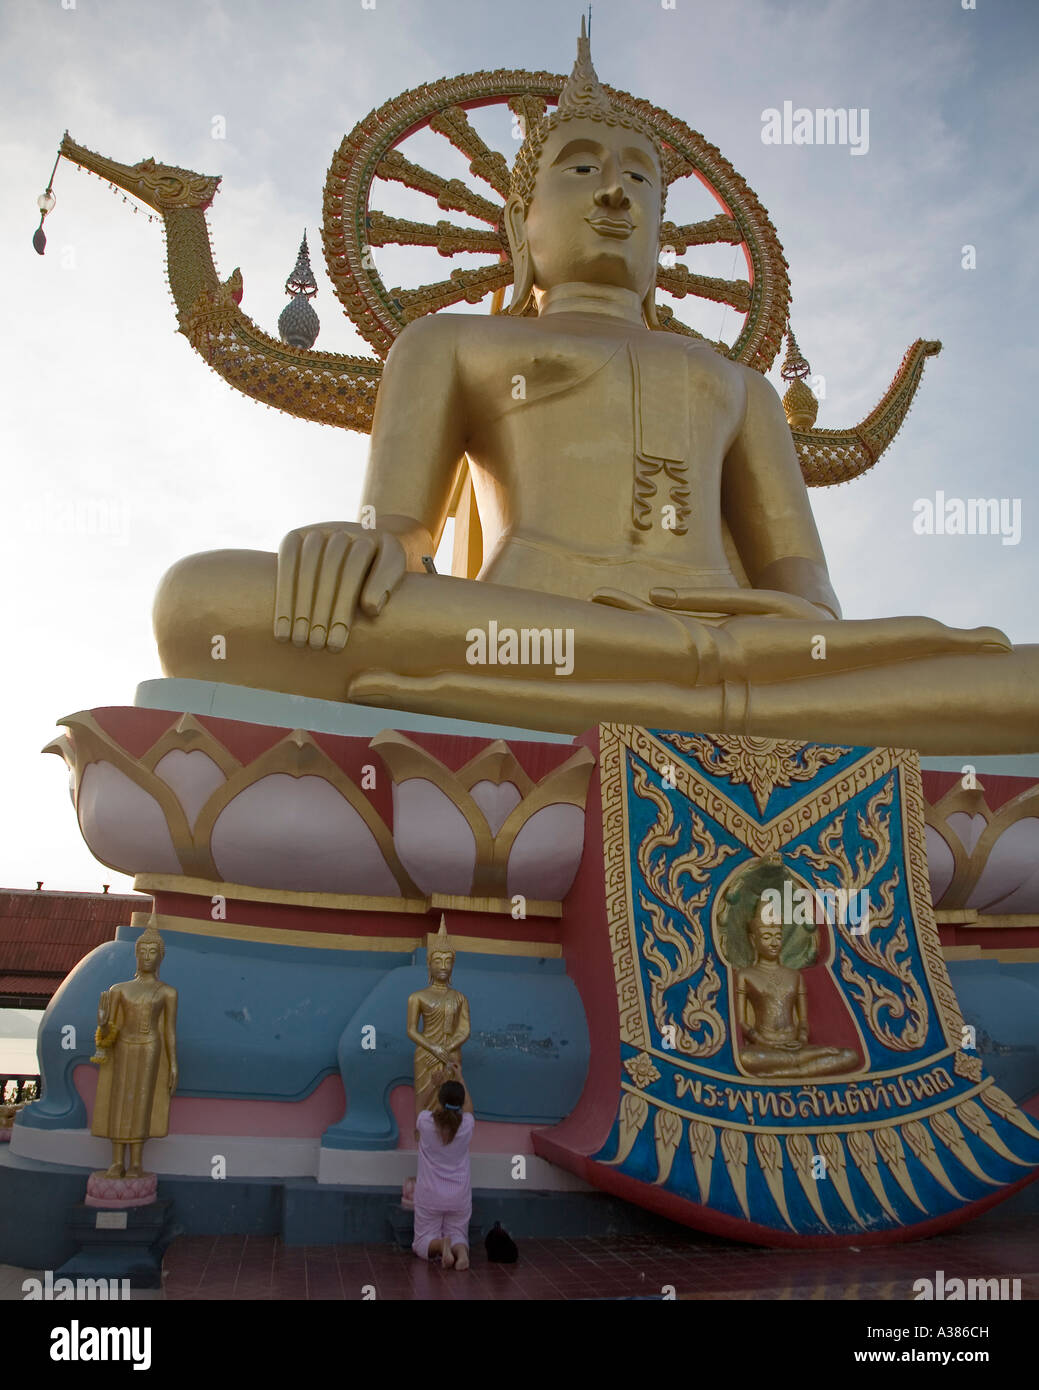 Le Grand Bouddha Big Buddha Beach Ko Samui Thaïlande Asie du sud-est Banque D'Images